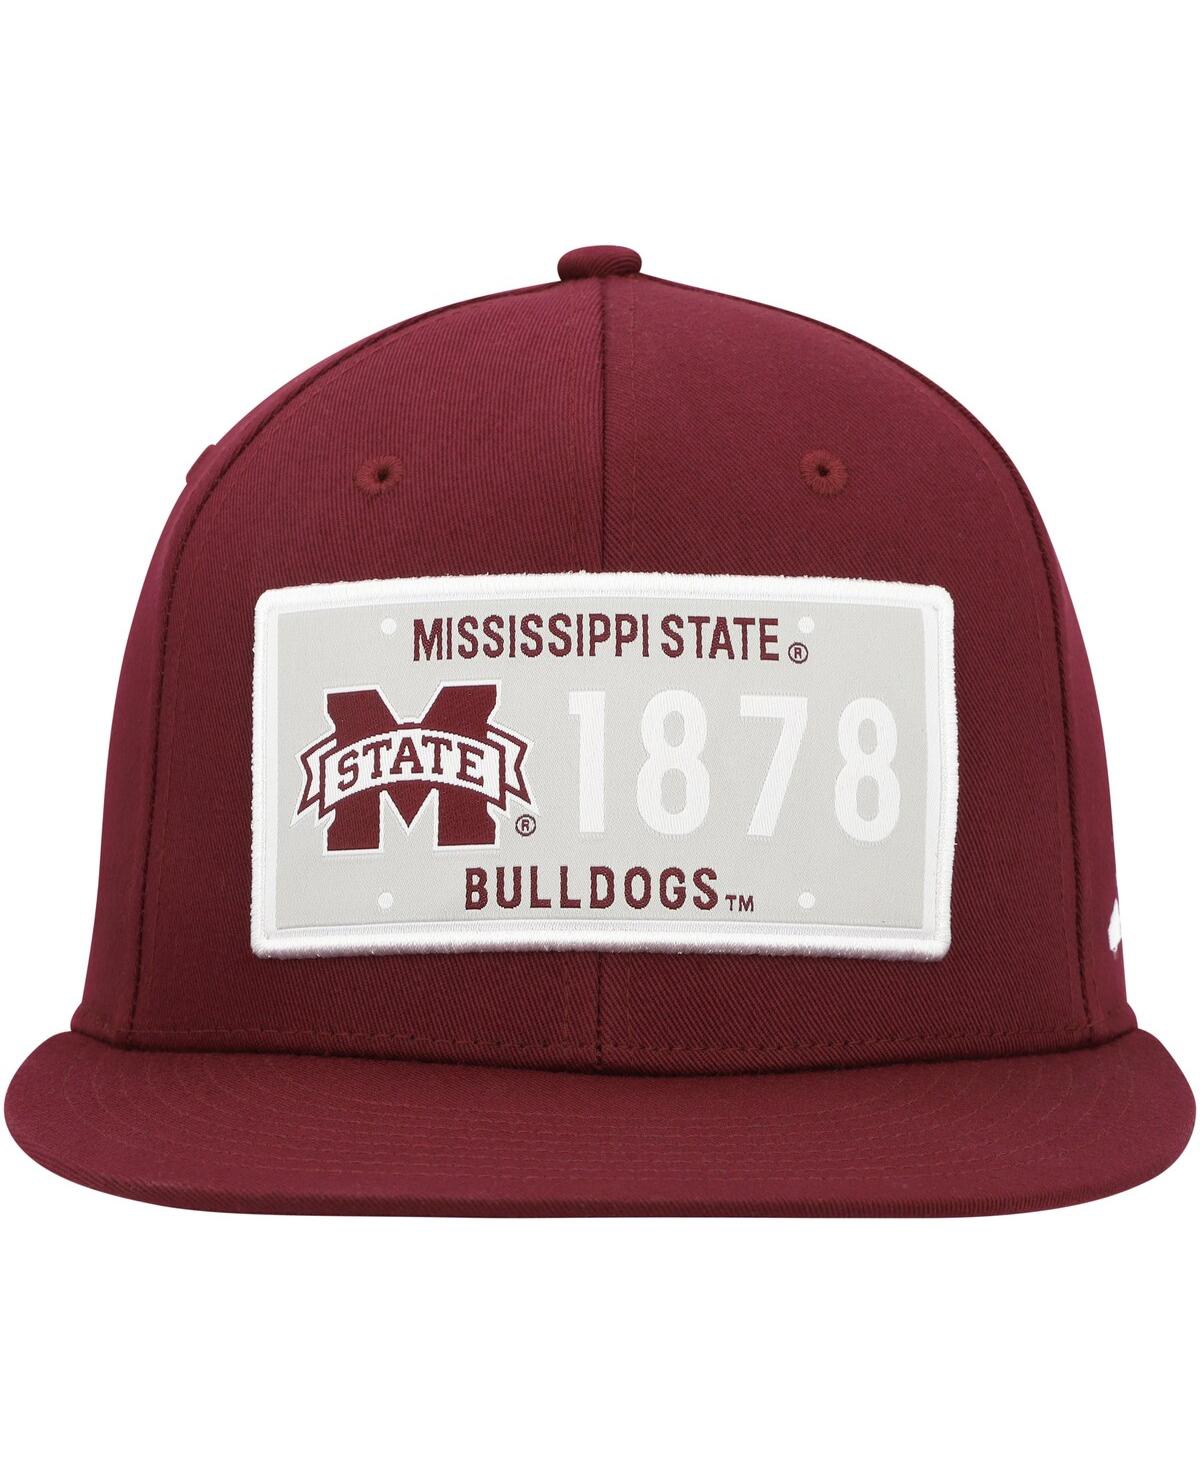 Shop Adidas Originals Men's Adidas Maroon Mississippi State Bulldogs Established Snapback Hat